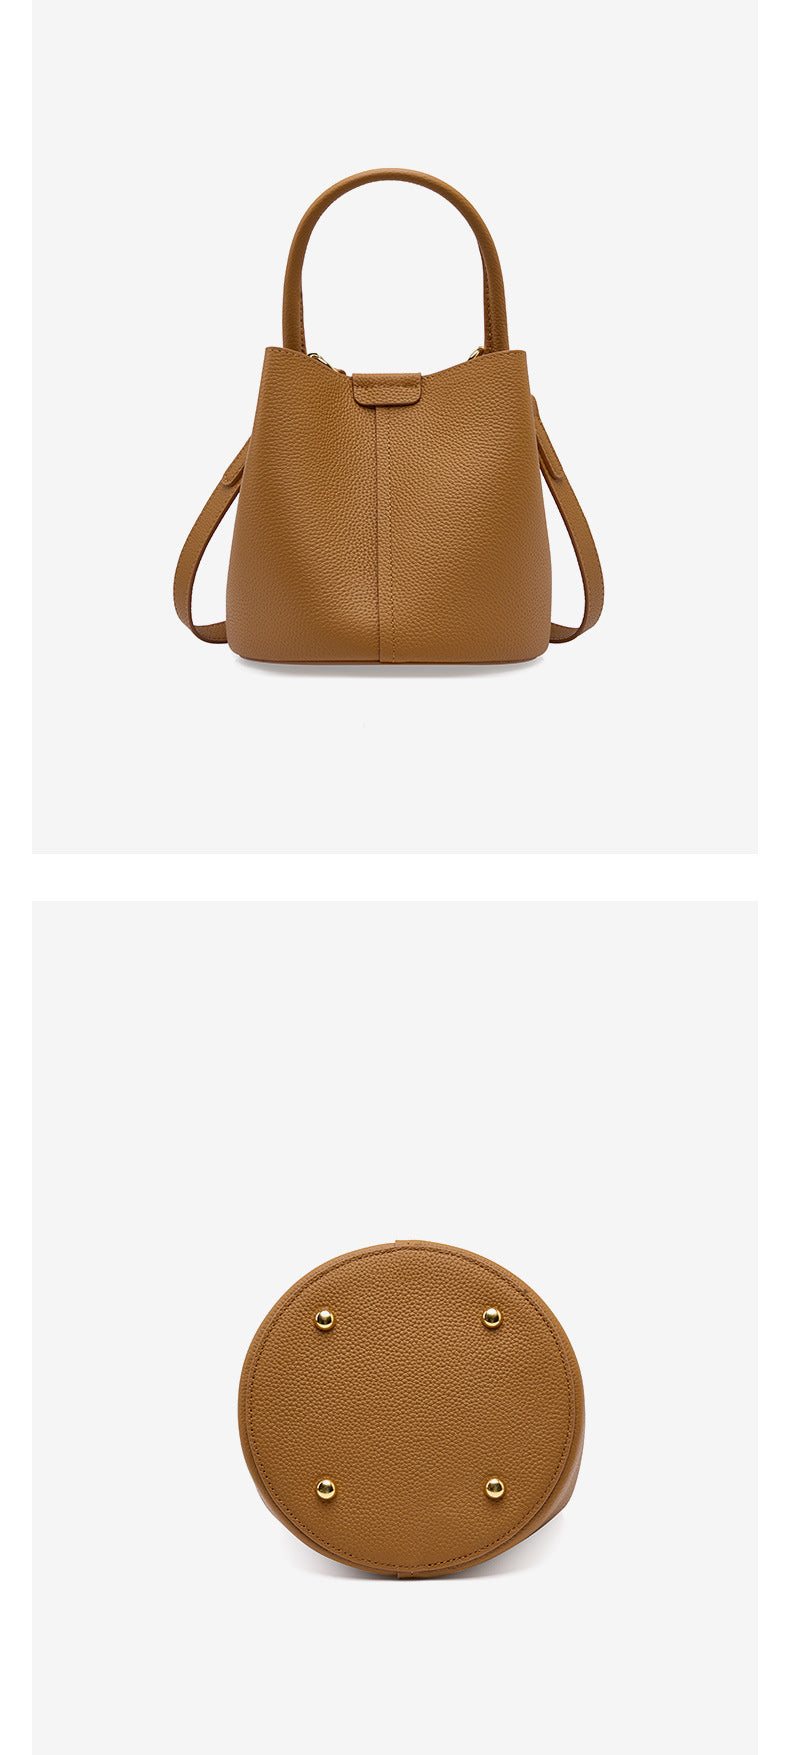 himoda genuine leather bucket bag - soft leather - tan brown - crossbody